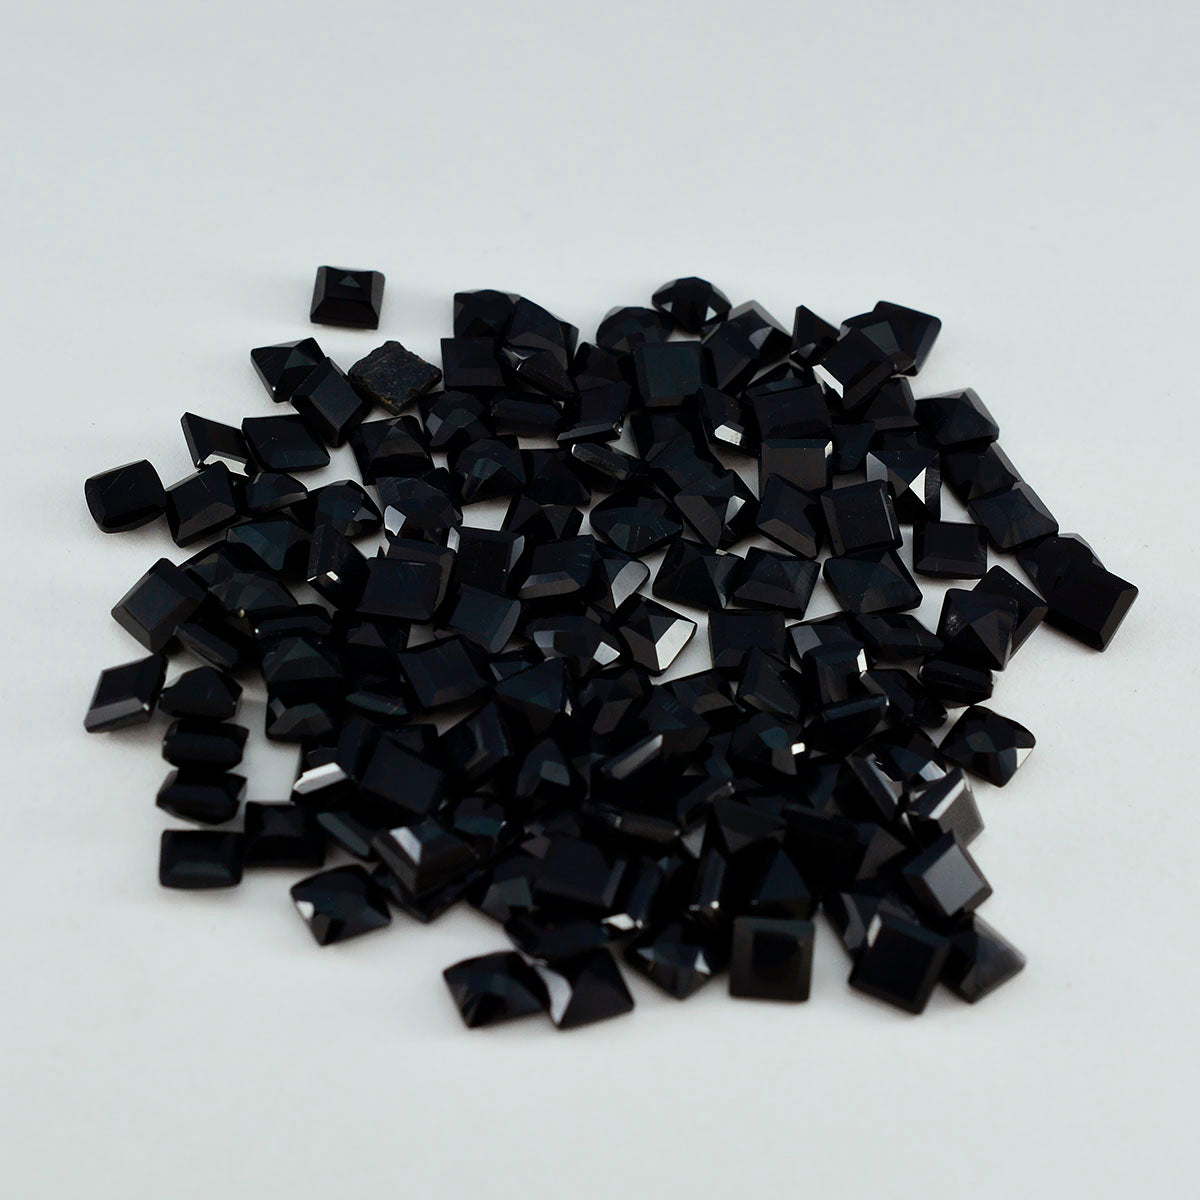 Riyogems 1PC Genuine Black Onyx Faceted 6x6 mm Square Shape wonderful Quality Loose Gems